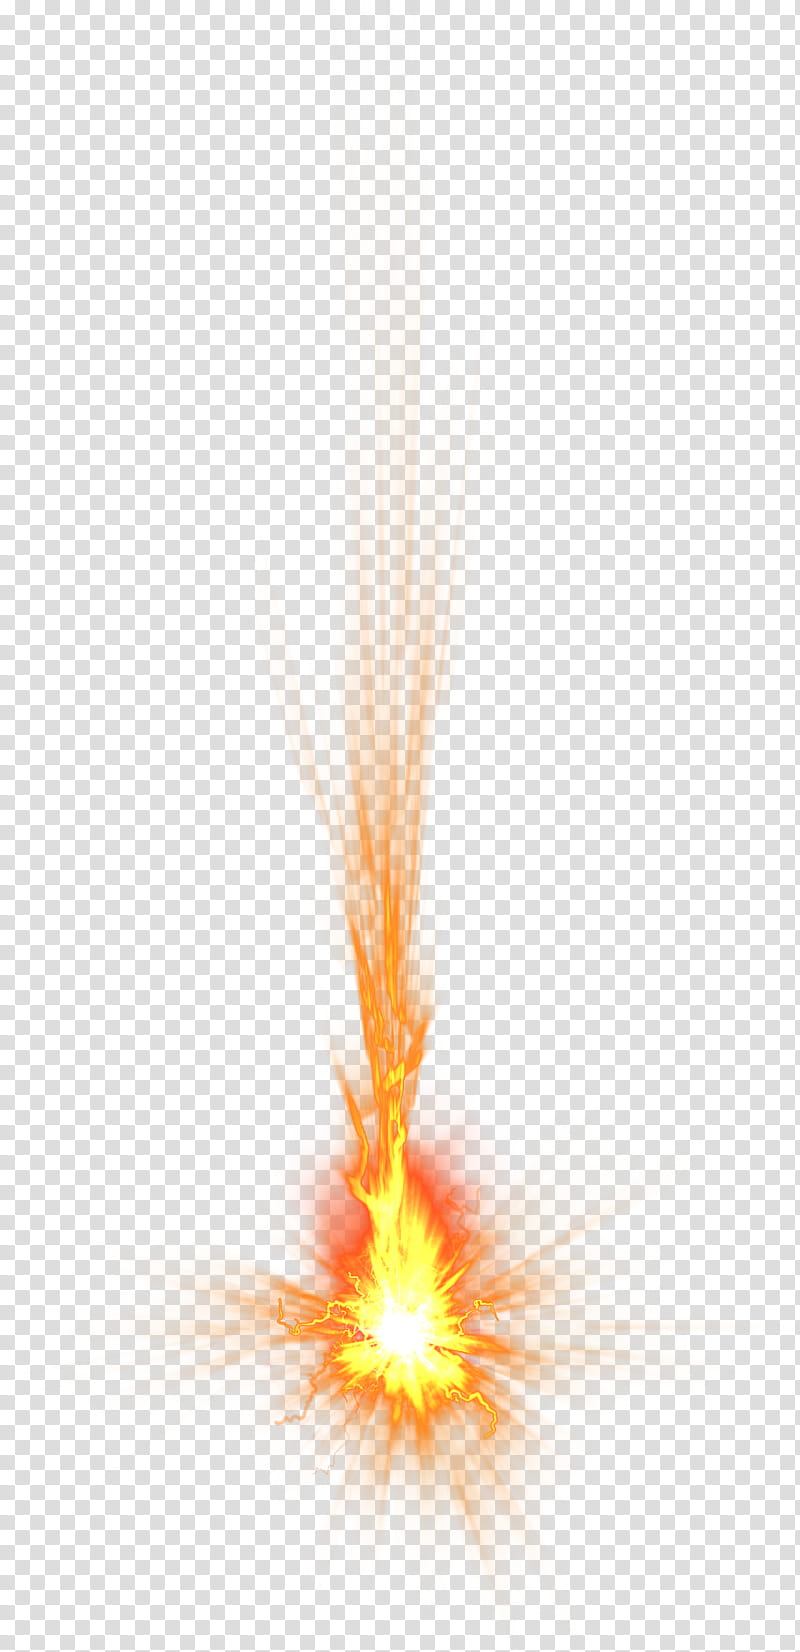 misc bg element, fire illustration transparent background PNG clipart